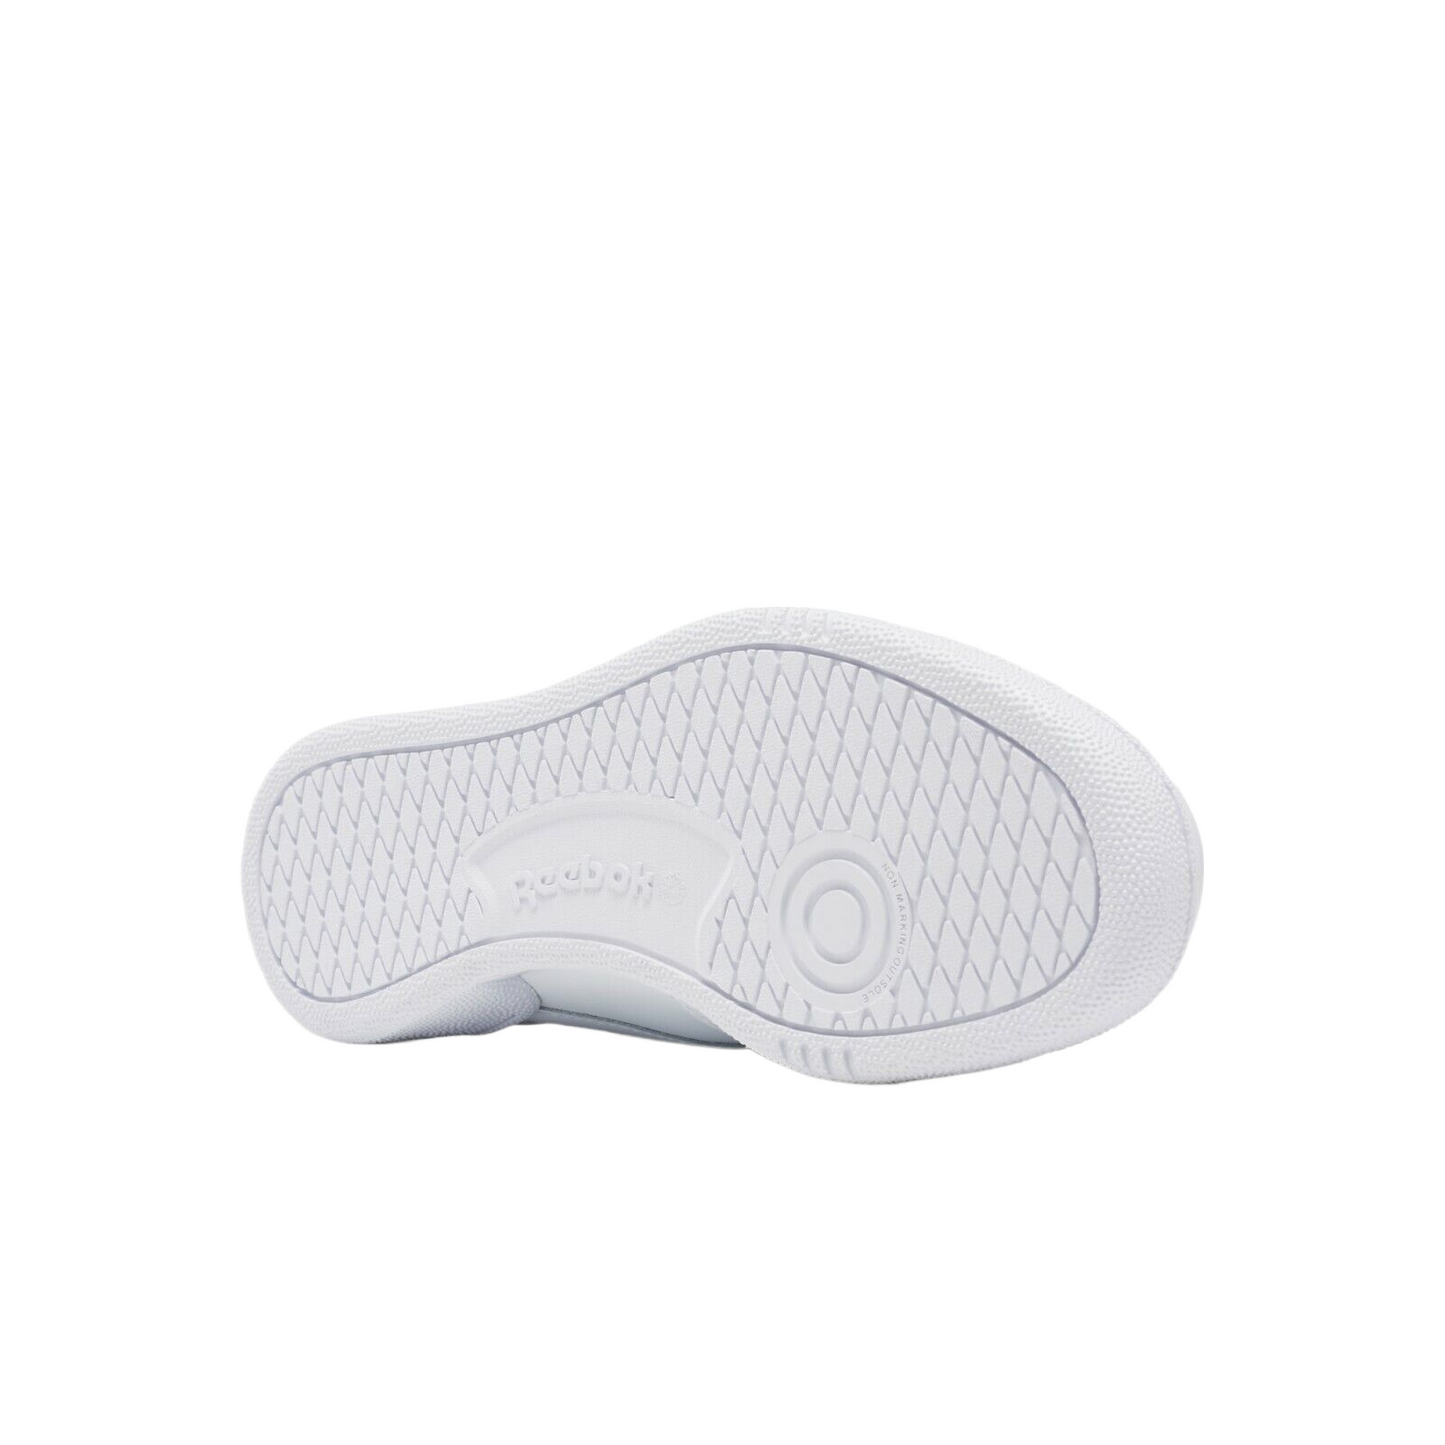 Reebok Men's Club C 85 Shoes White / Sheer Grey AR0455